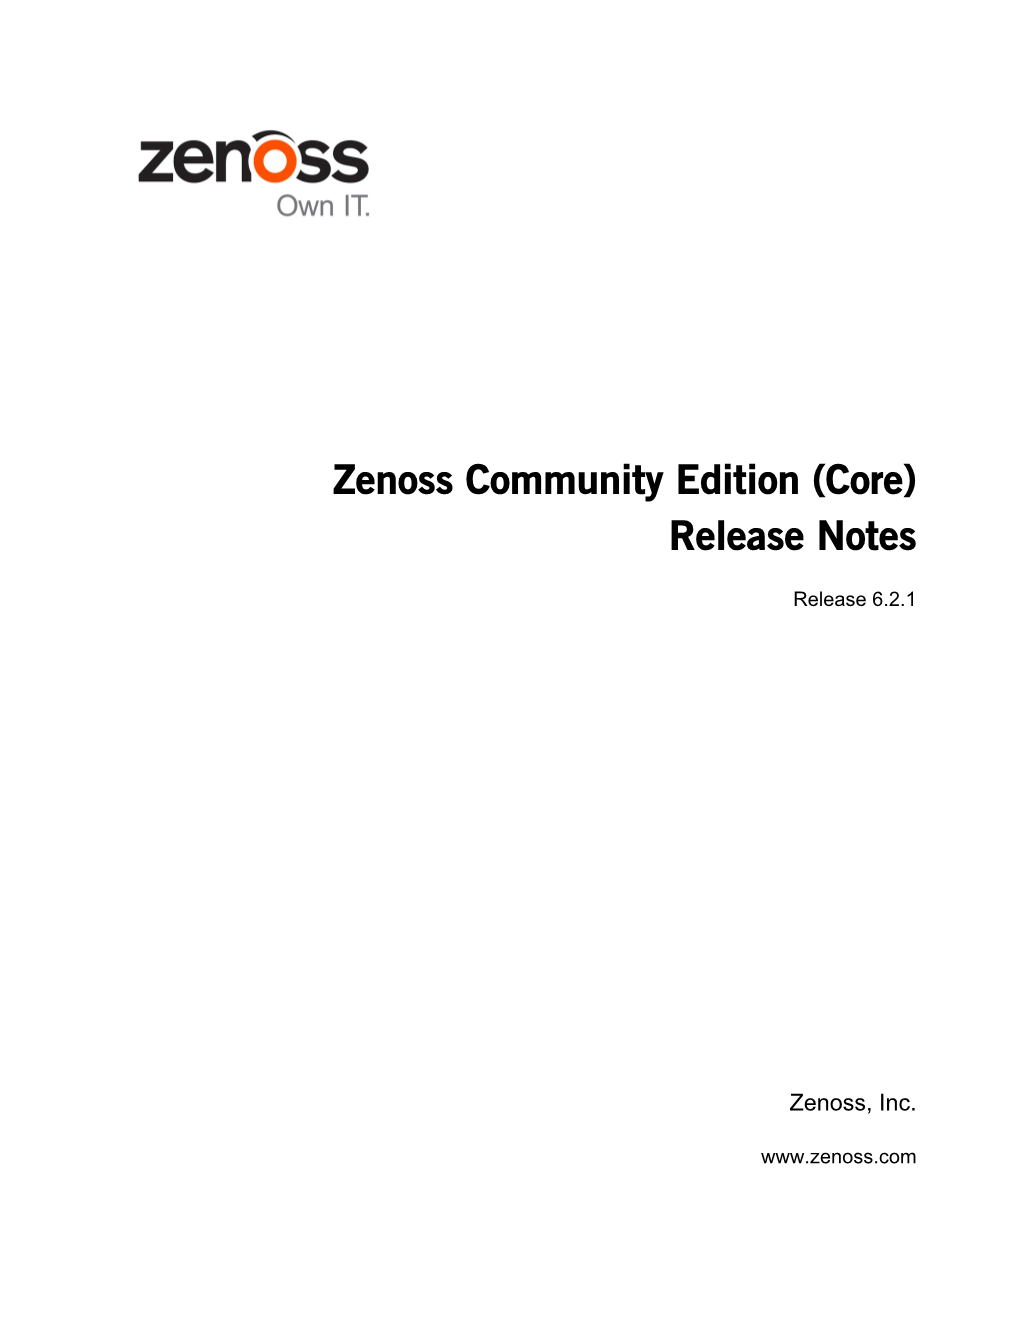 Zenoss Community Edition (Core) Release Notes